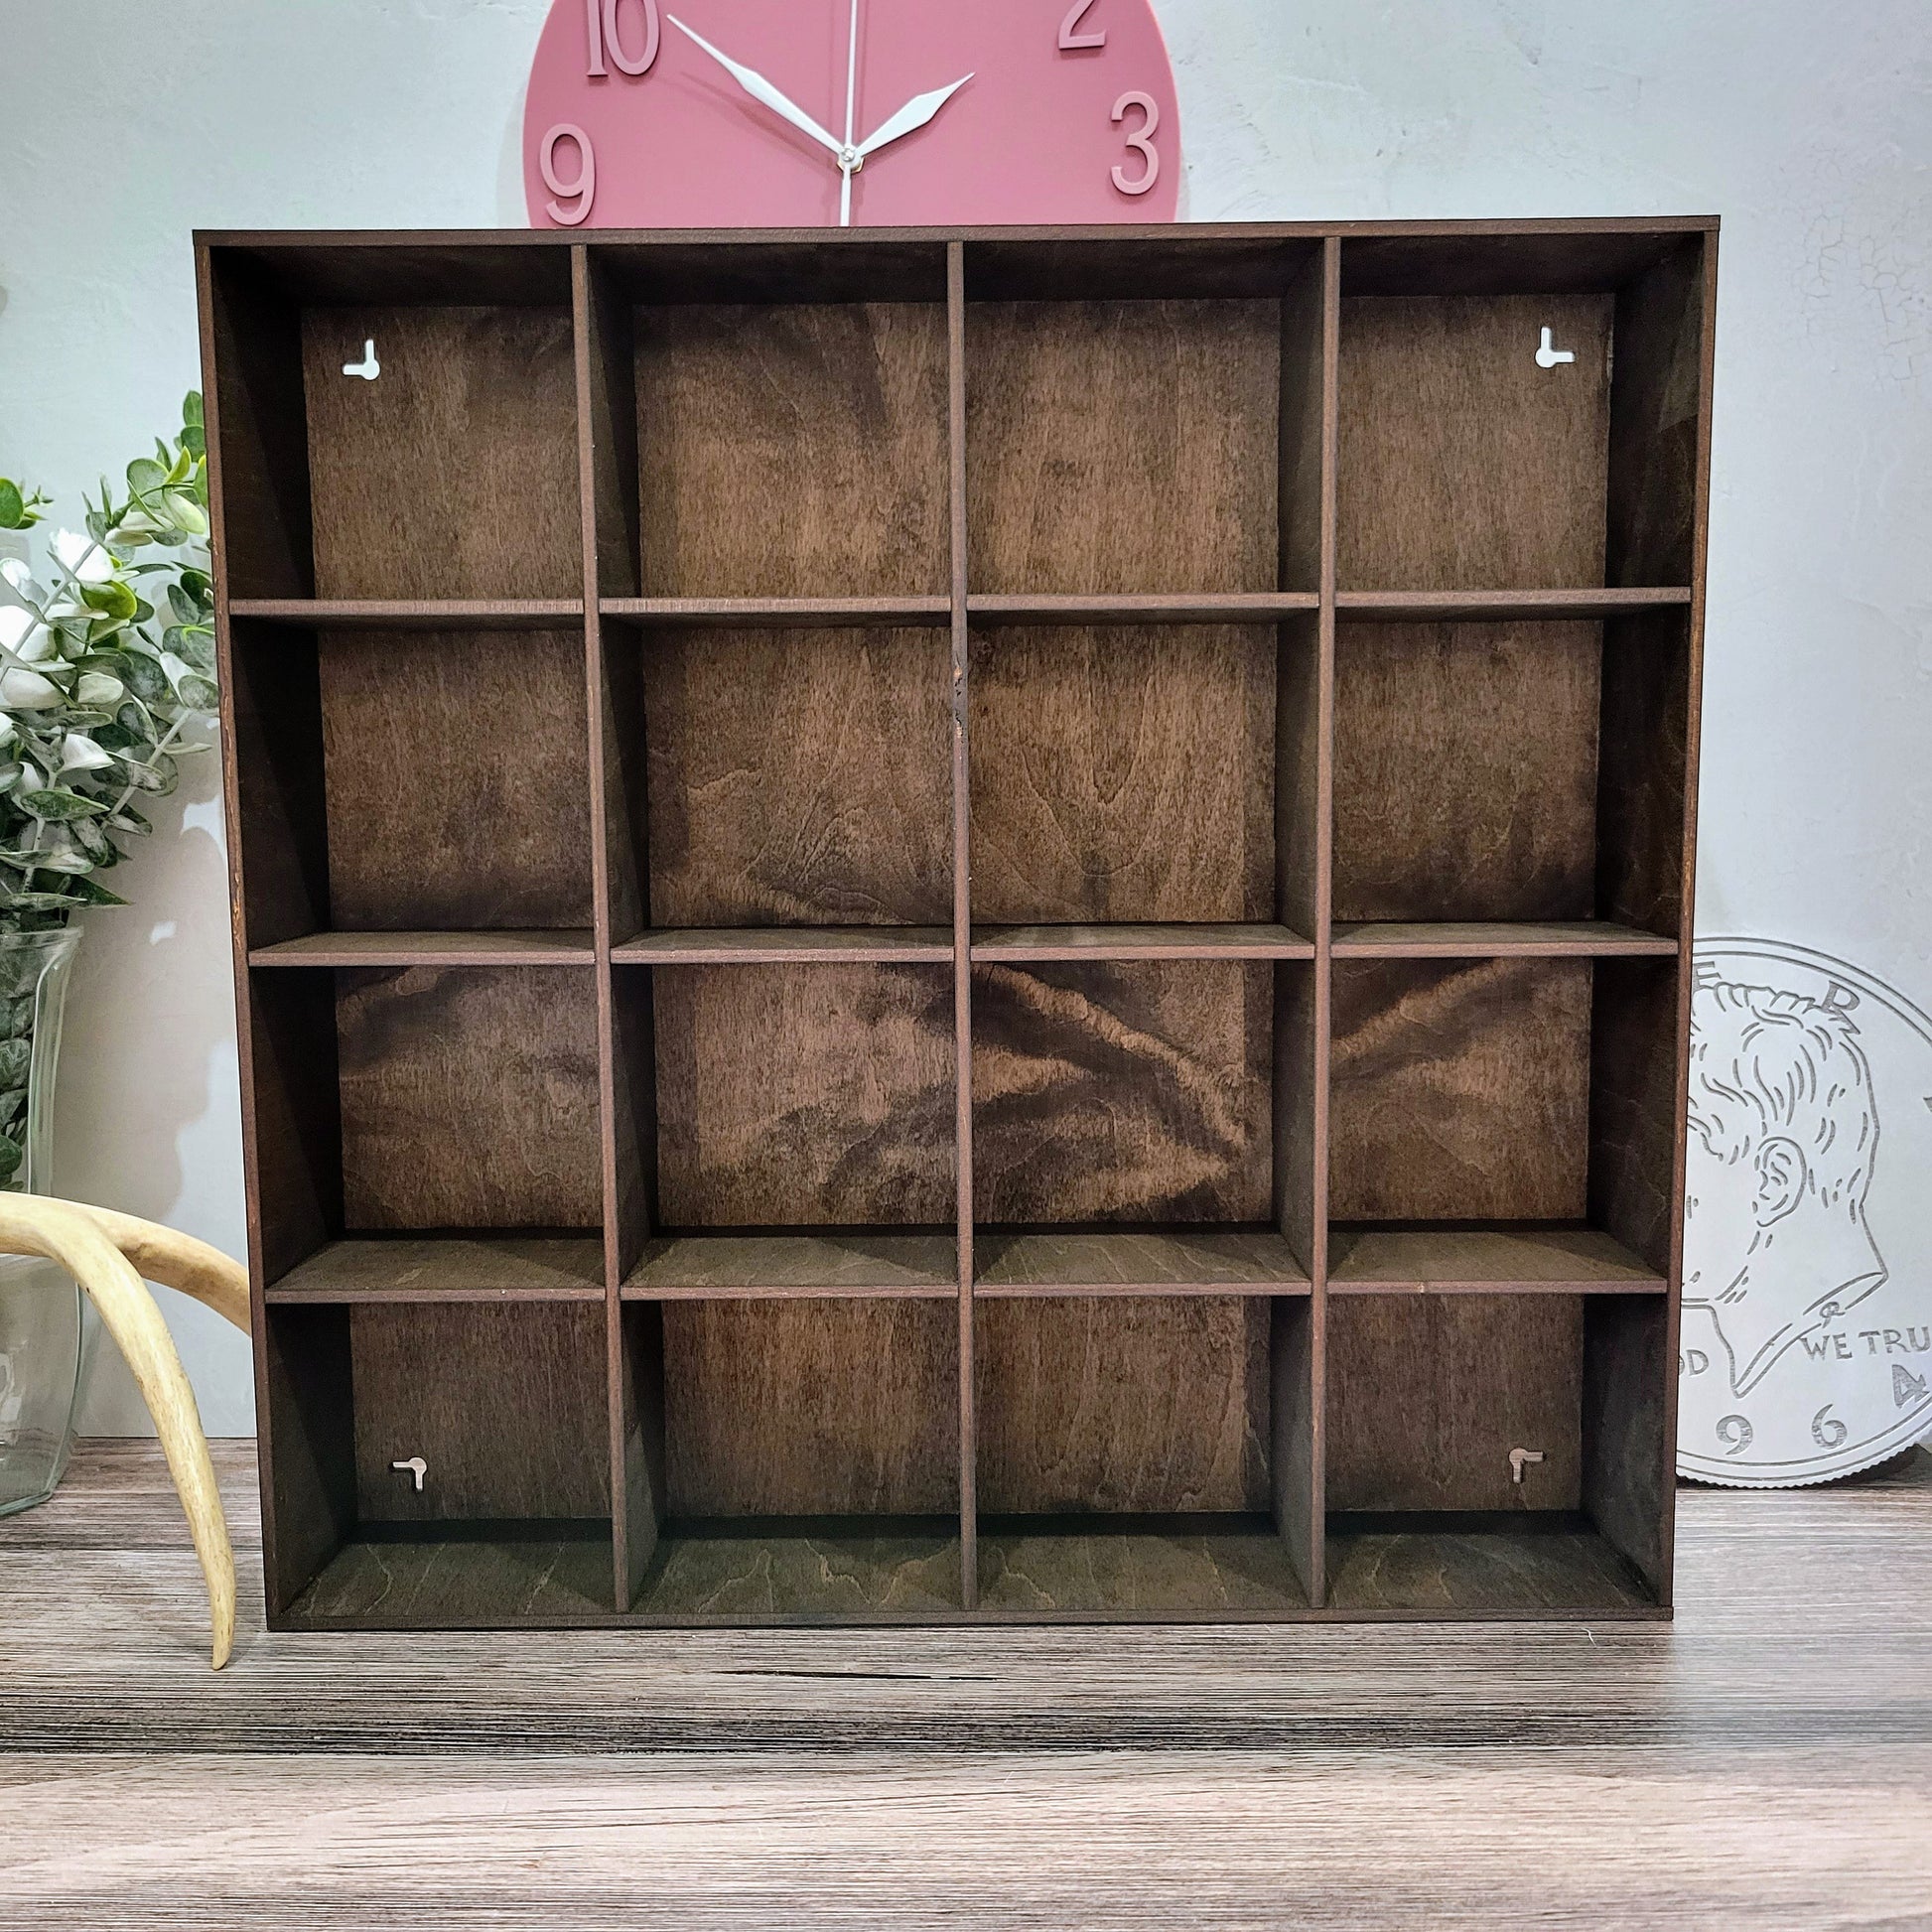 16 Compartment Wooden Display Shelf- Trinket ShelfCurio Cabinet- Knick Knack Collection Display - Printer Tray -Figure Organizer Display